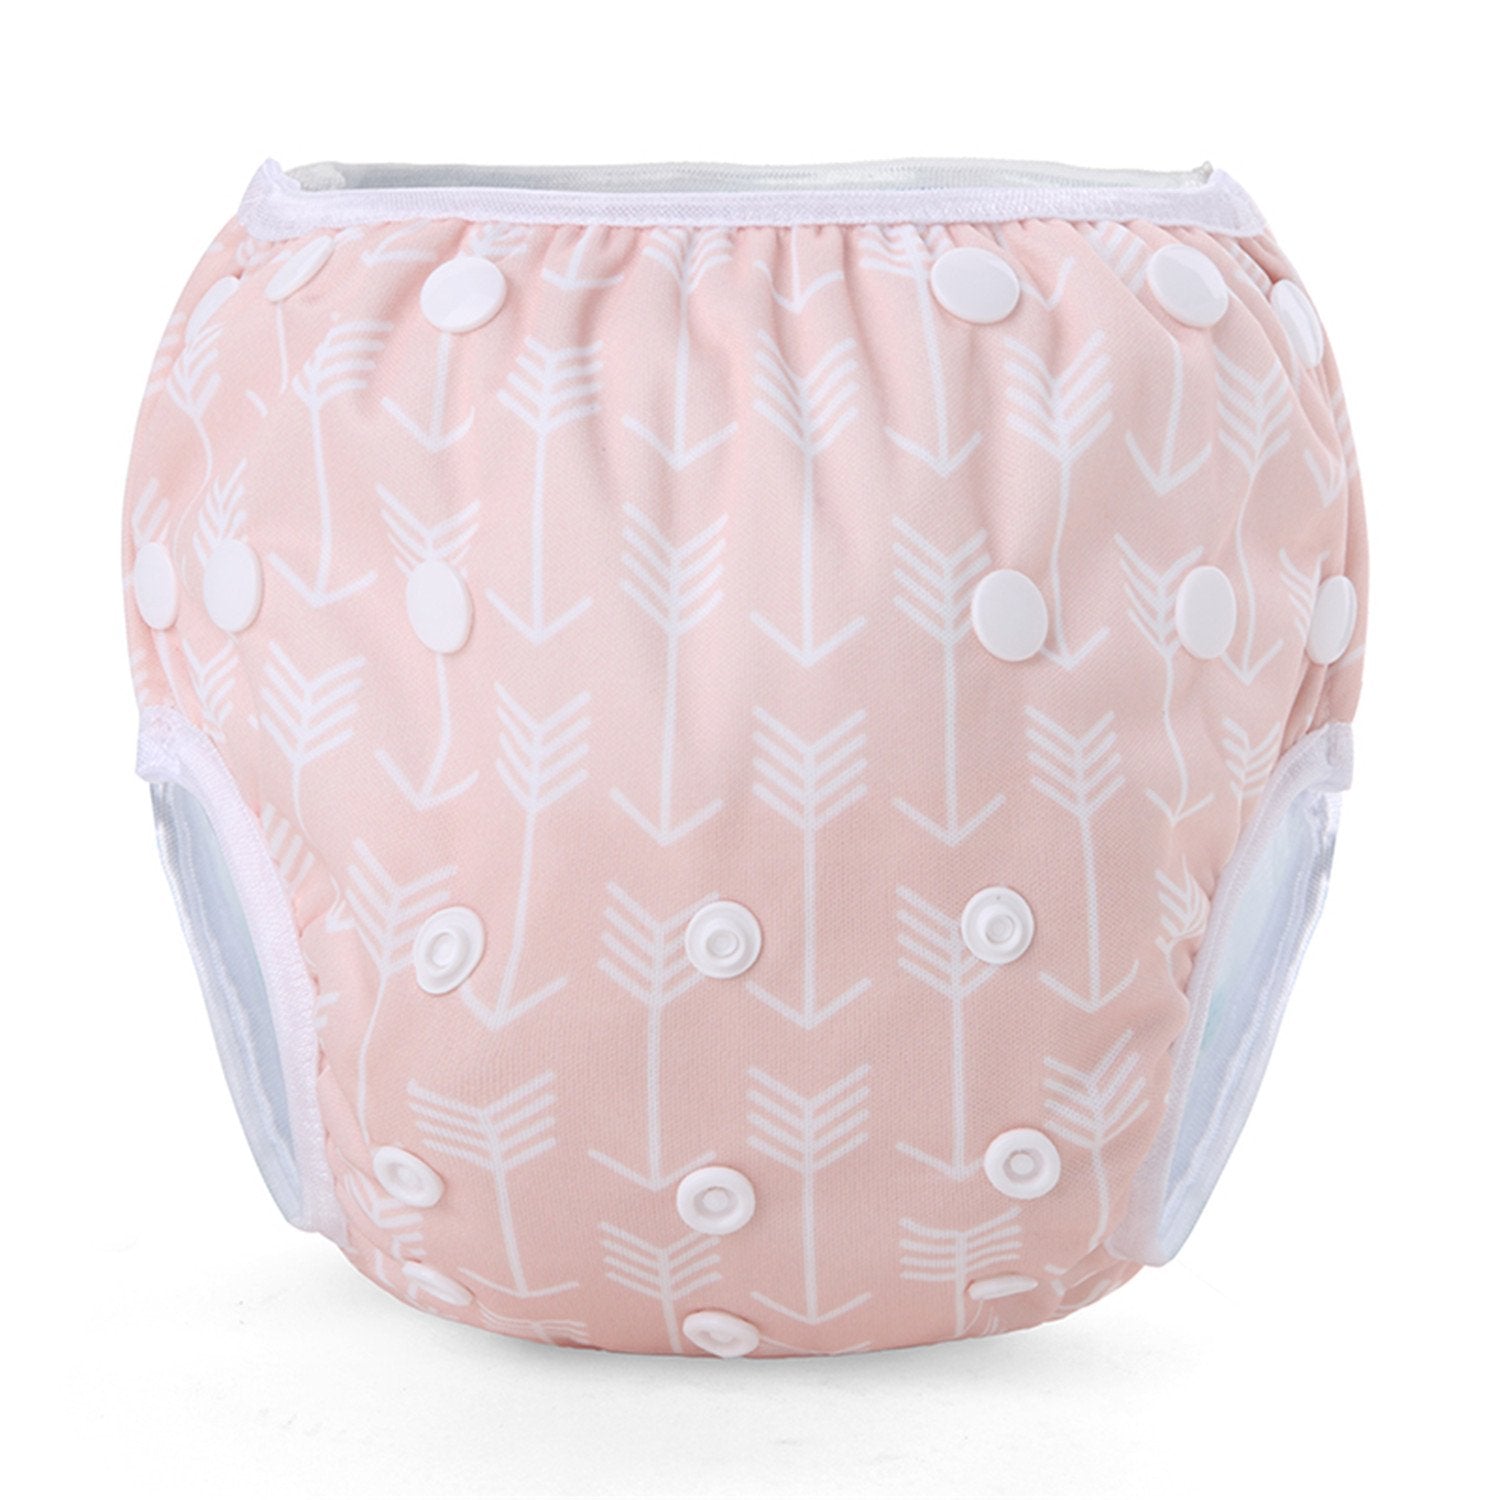 Reusable Baby Swim Diapers Washable Adjustable Swim Pant Covers 2pcs